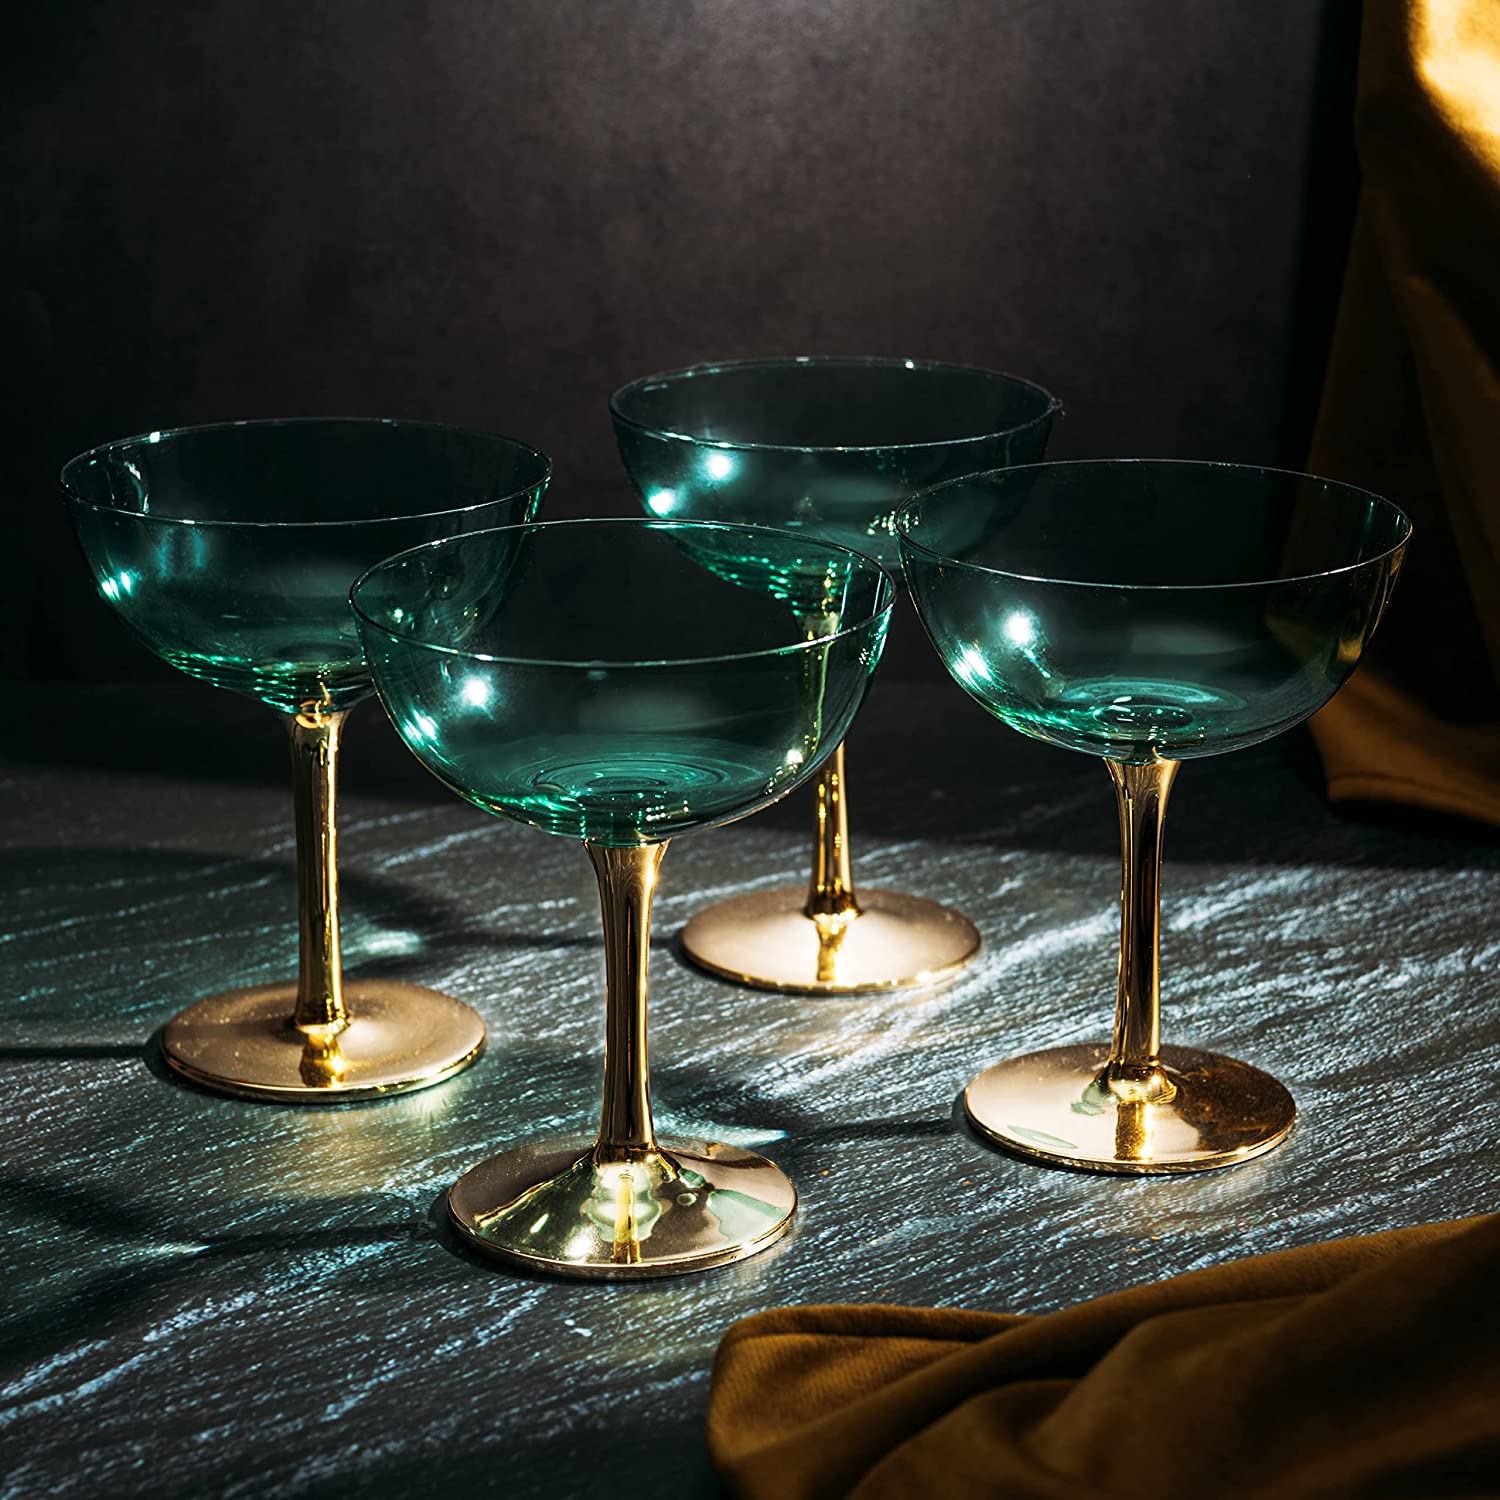 KEMORELA 12oz Drinking Glasses Art Deco Cocktail